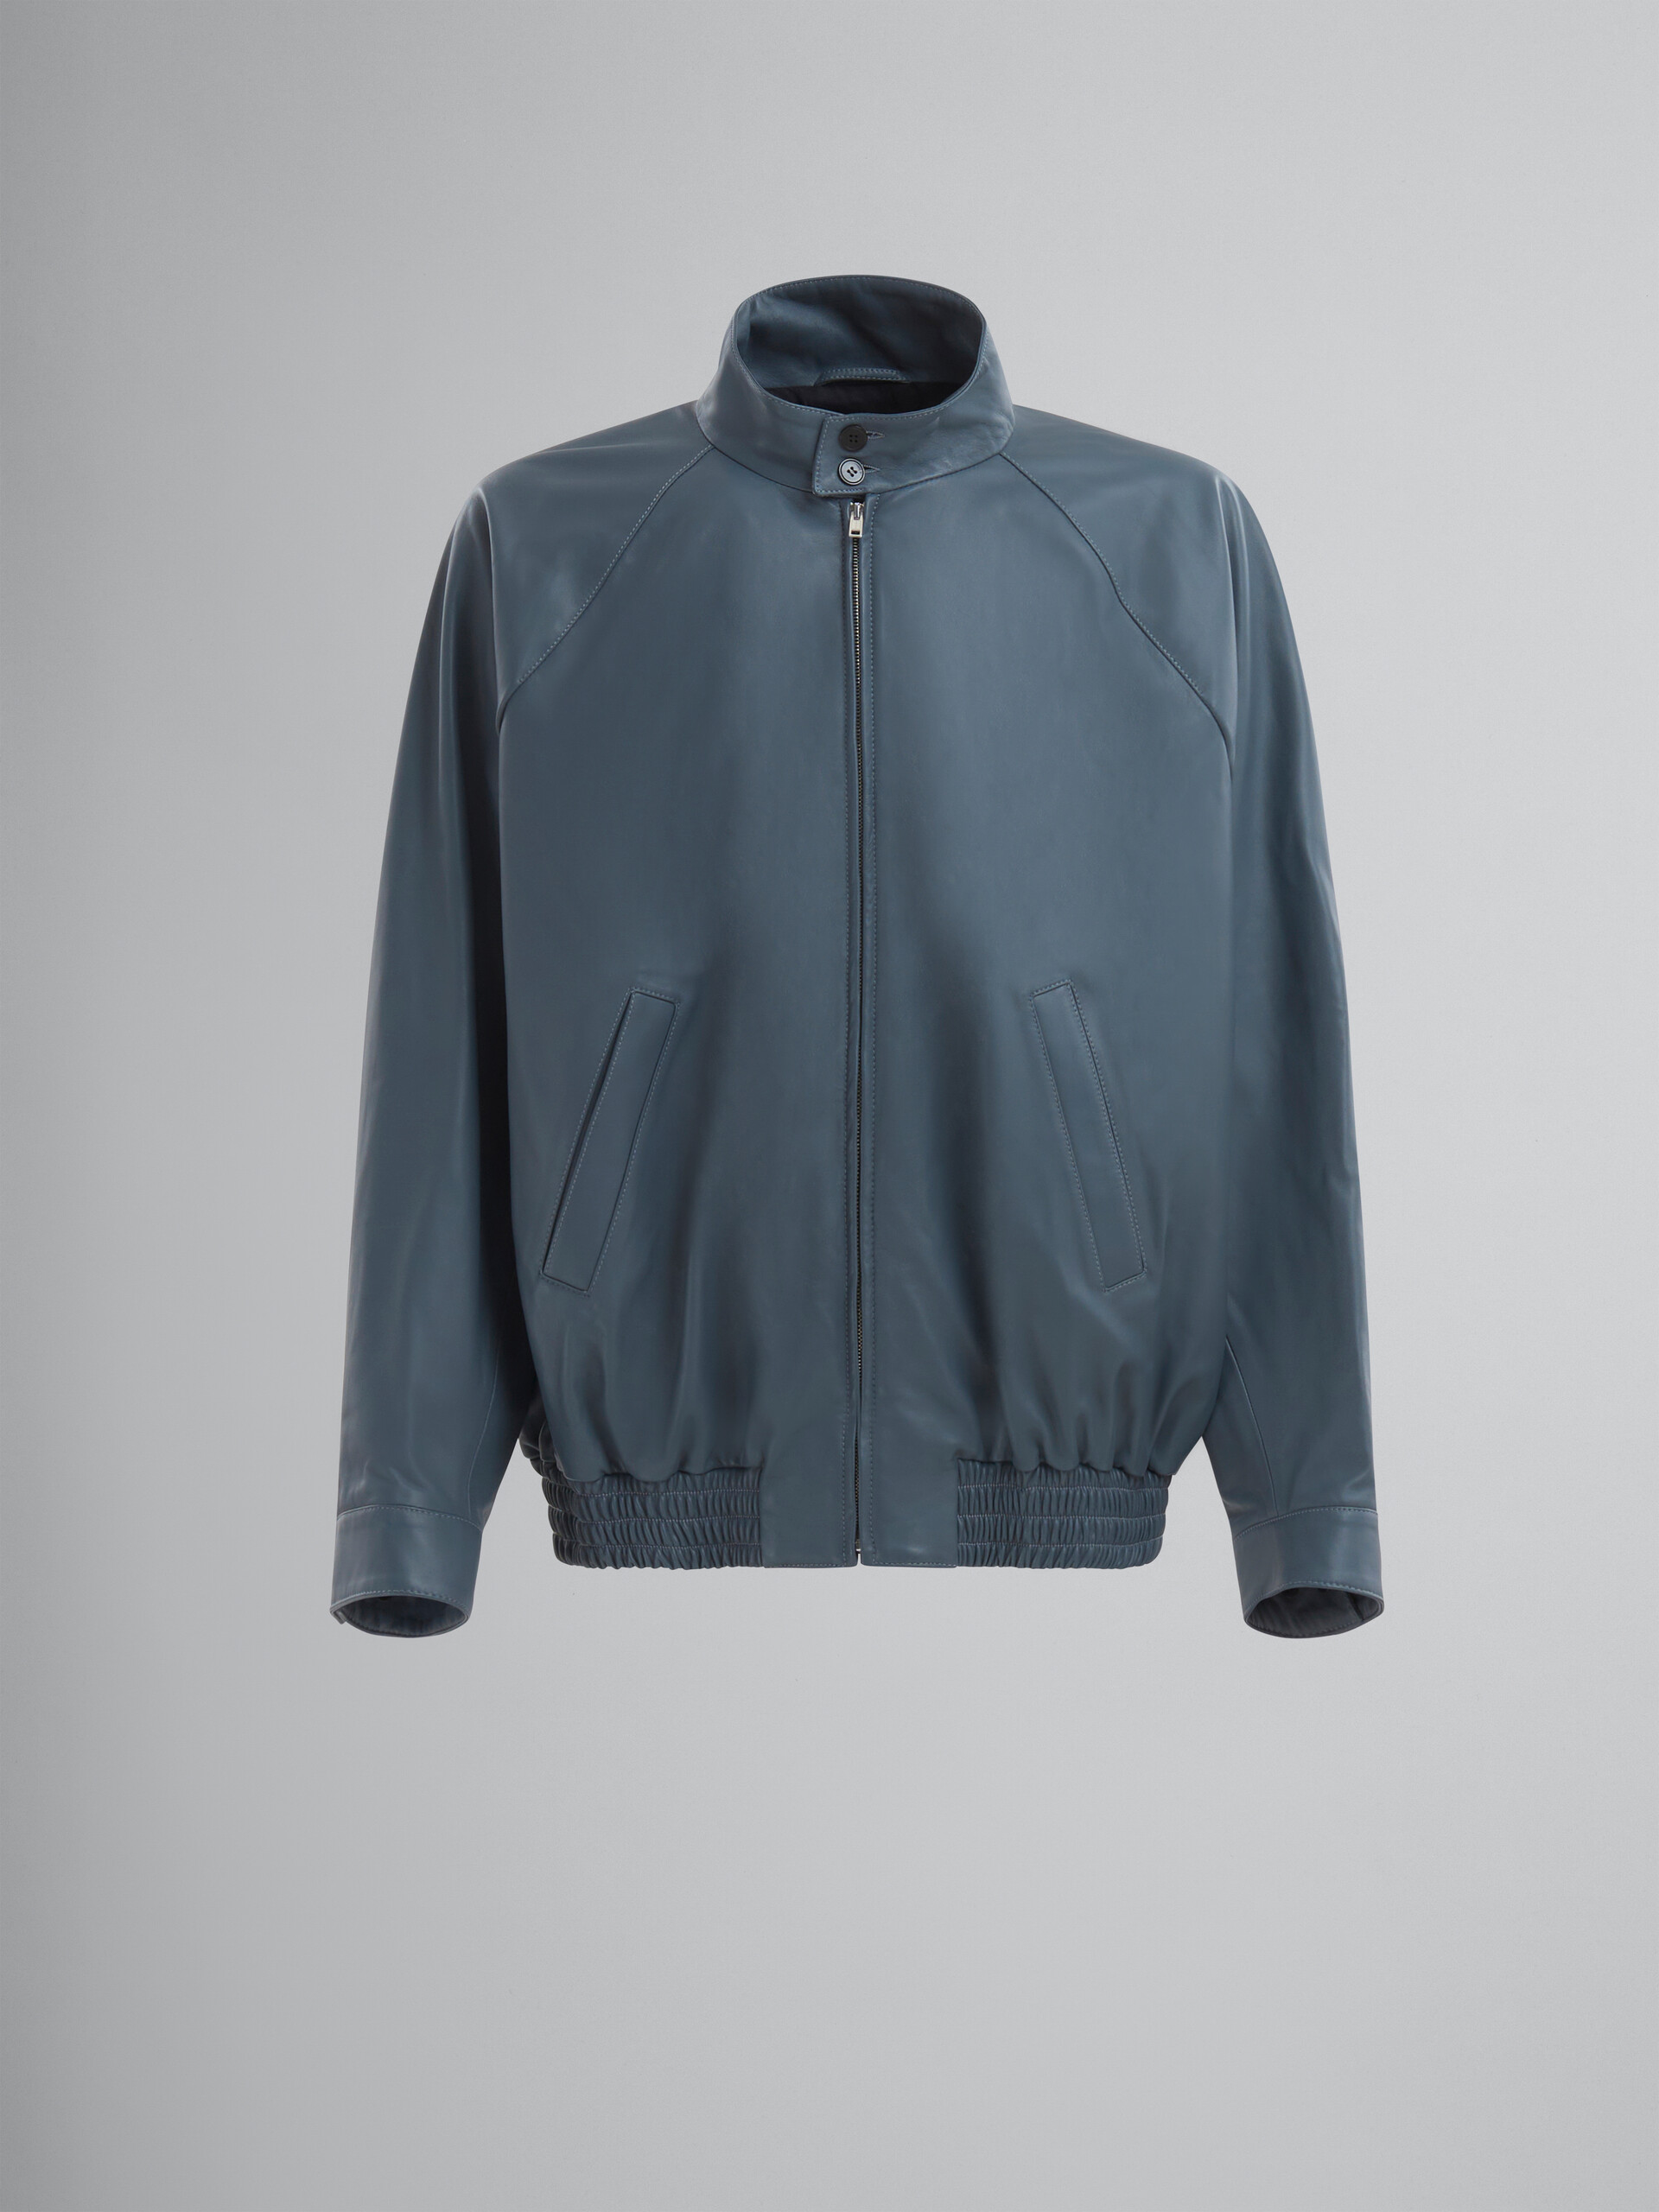 Teal nappa leather bomber jacket - Jackets - Image 1